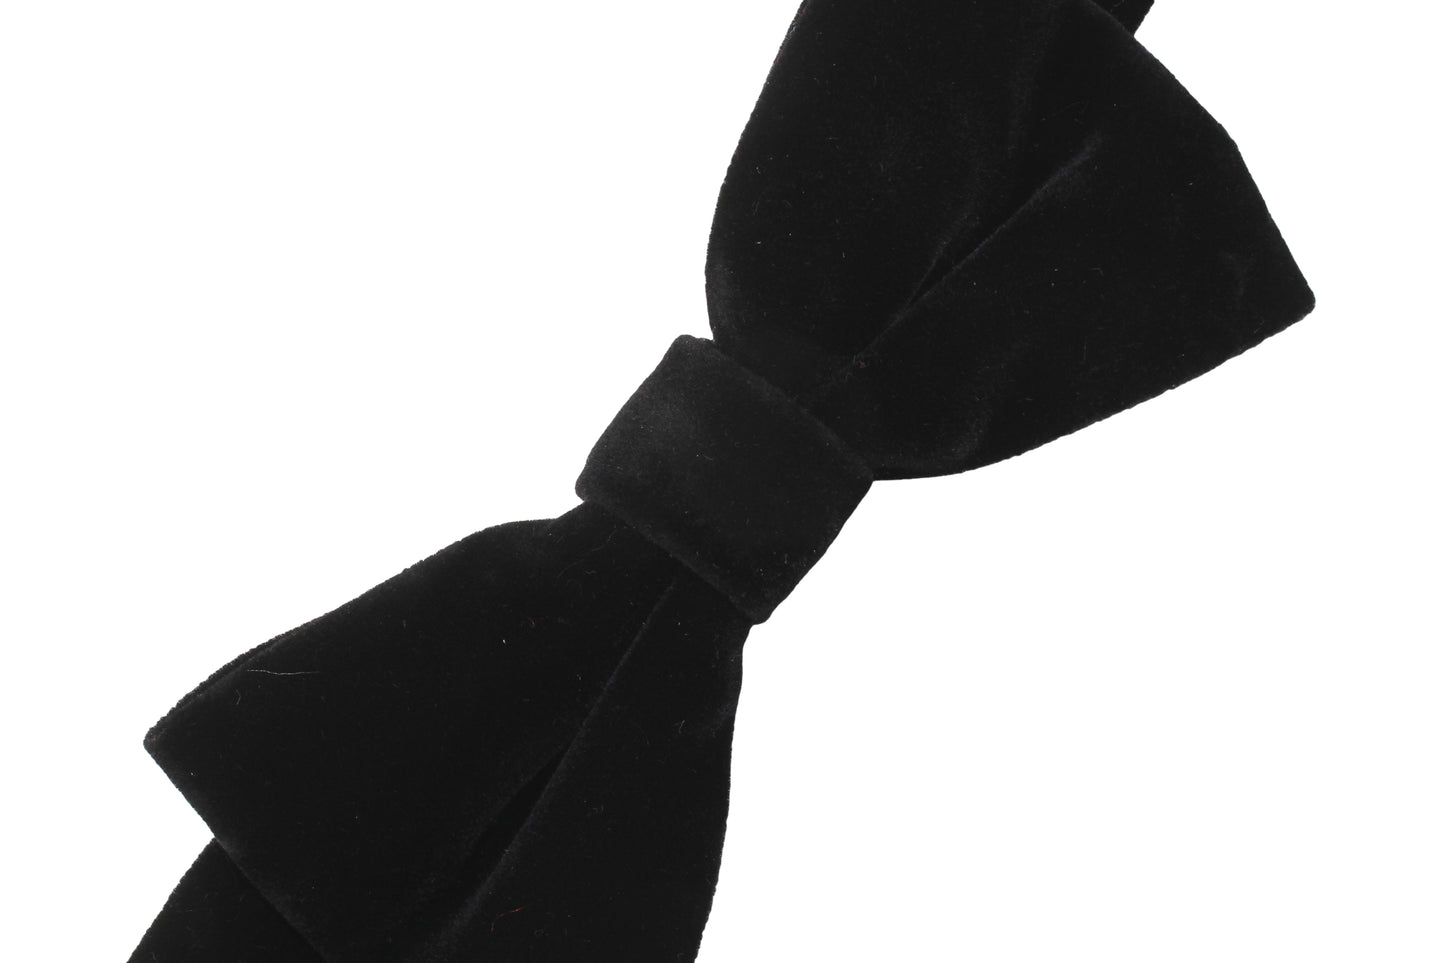 Alvaro Castagnino Men's Black Colored Bow Tie